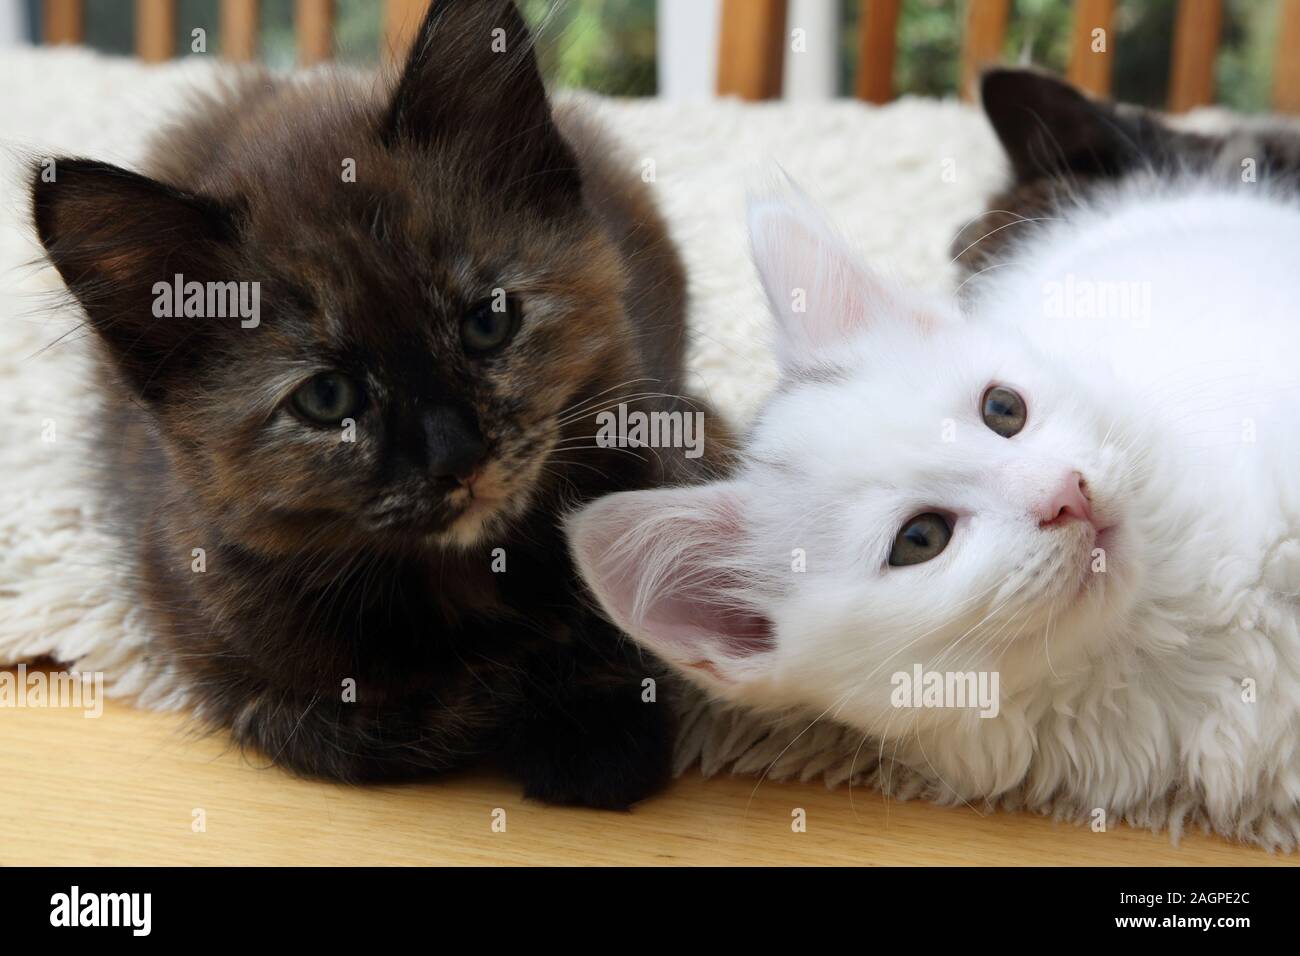 10 Week Old Kittens Turkish Angora Cross Tortoiseshell And White With Grey Markings Stock Photo Alamy